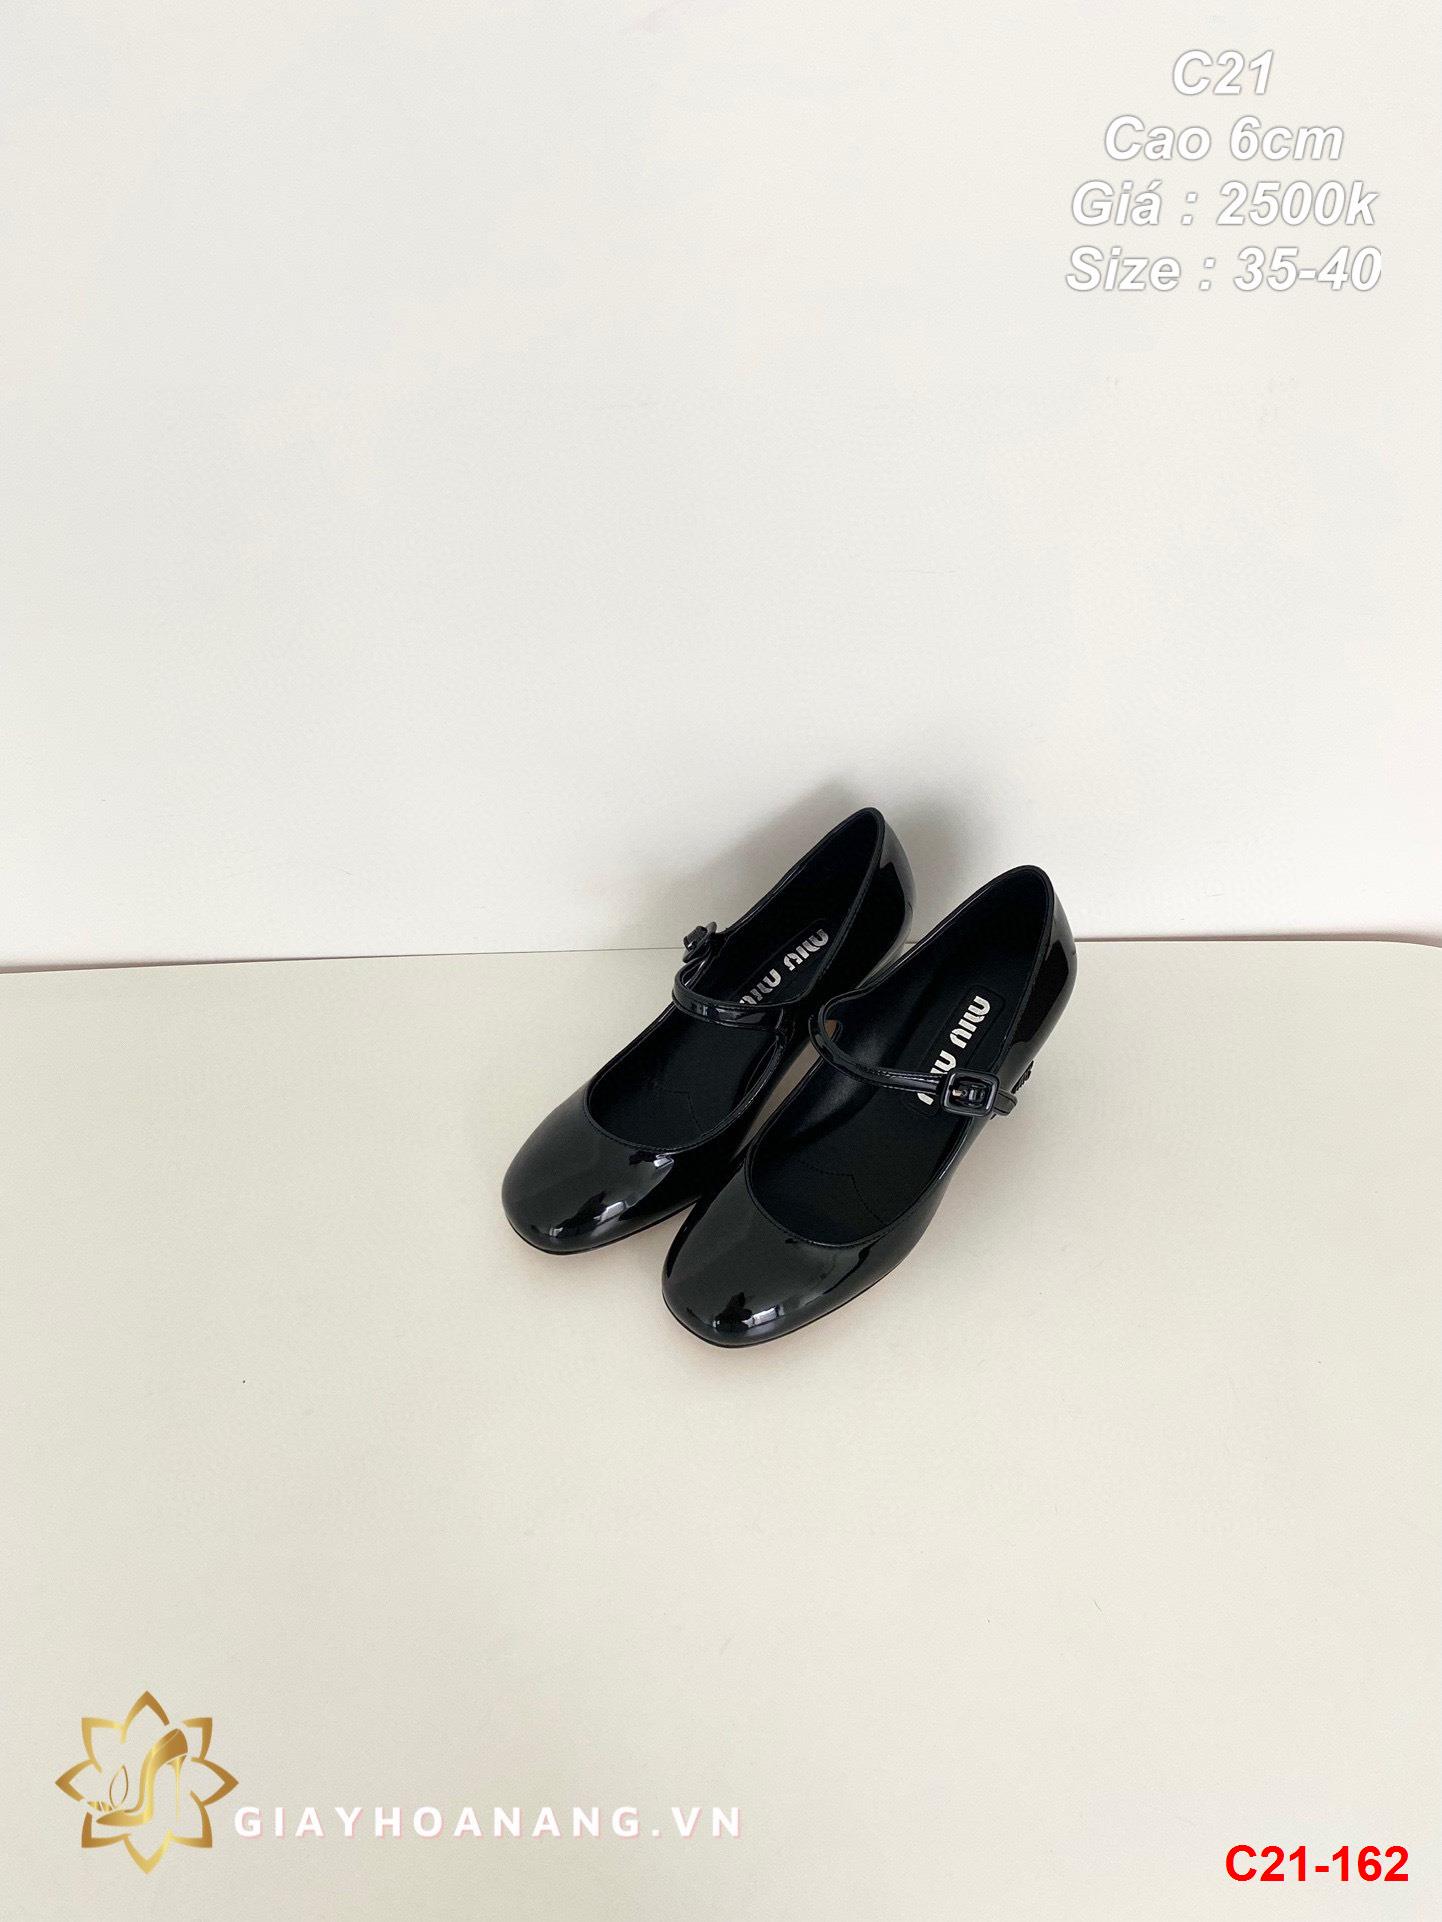 C21-162 Miu Miu sandal cao 6cm siêu cấp